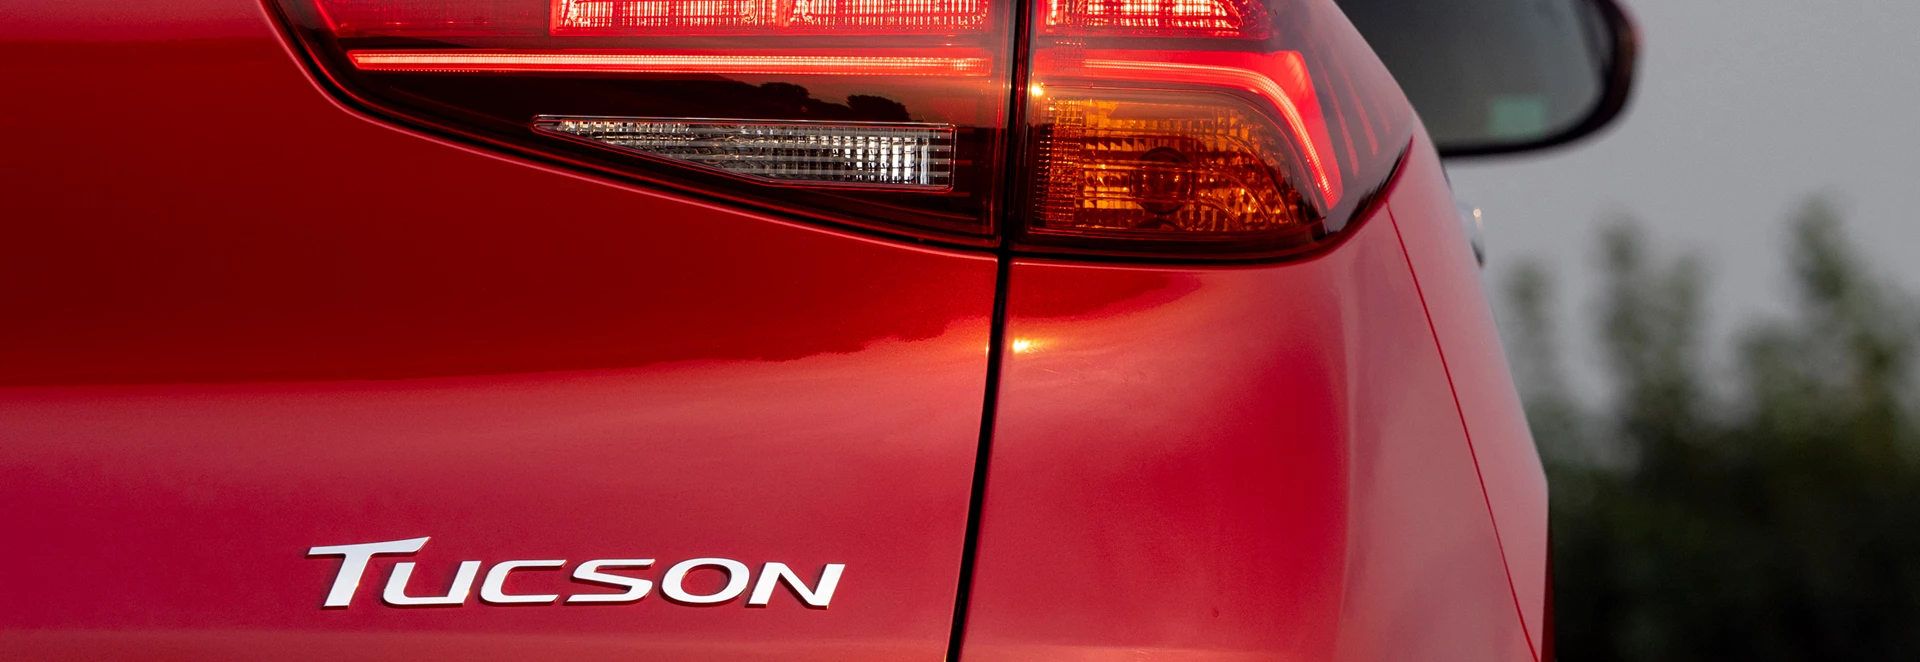 2018 Hyundai Tucson 48V review 